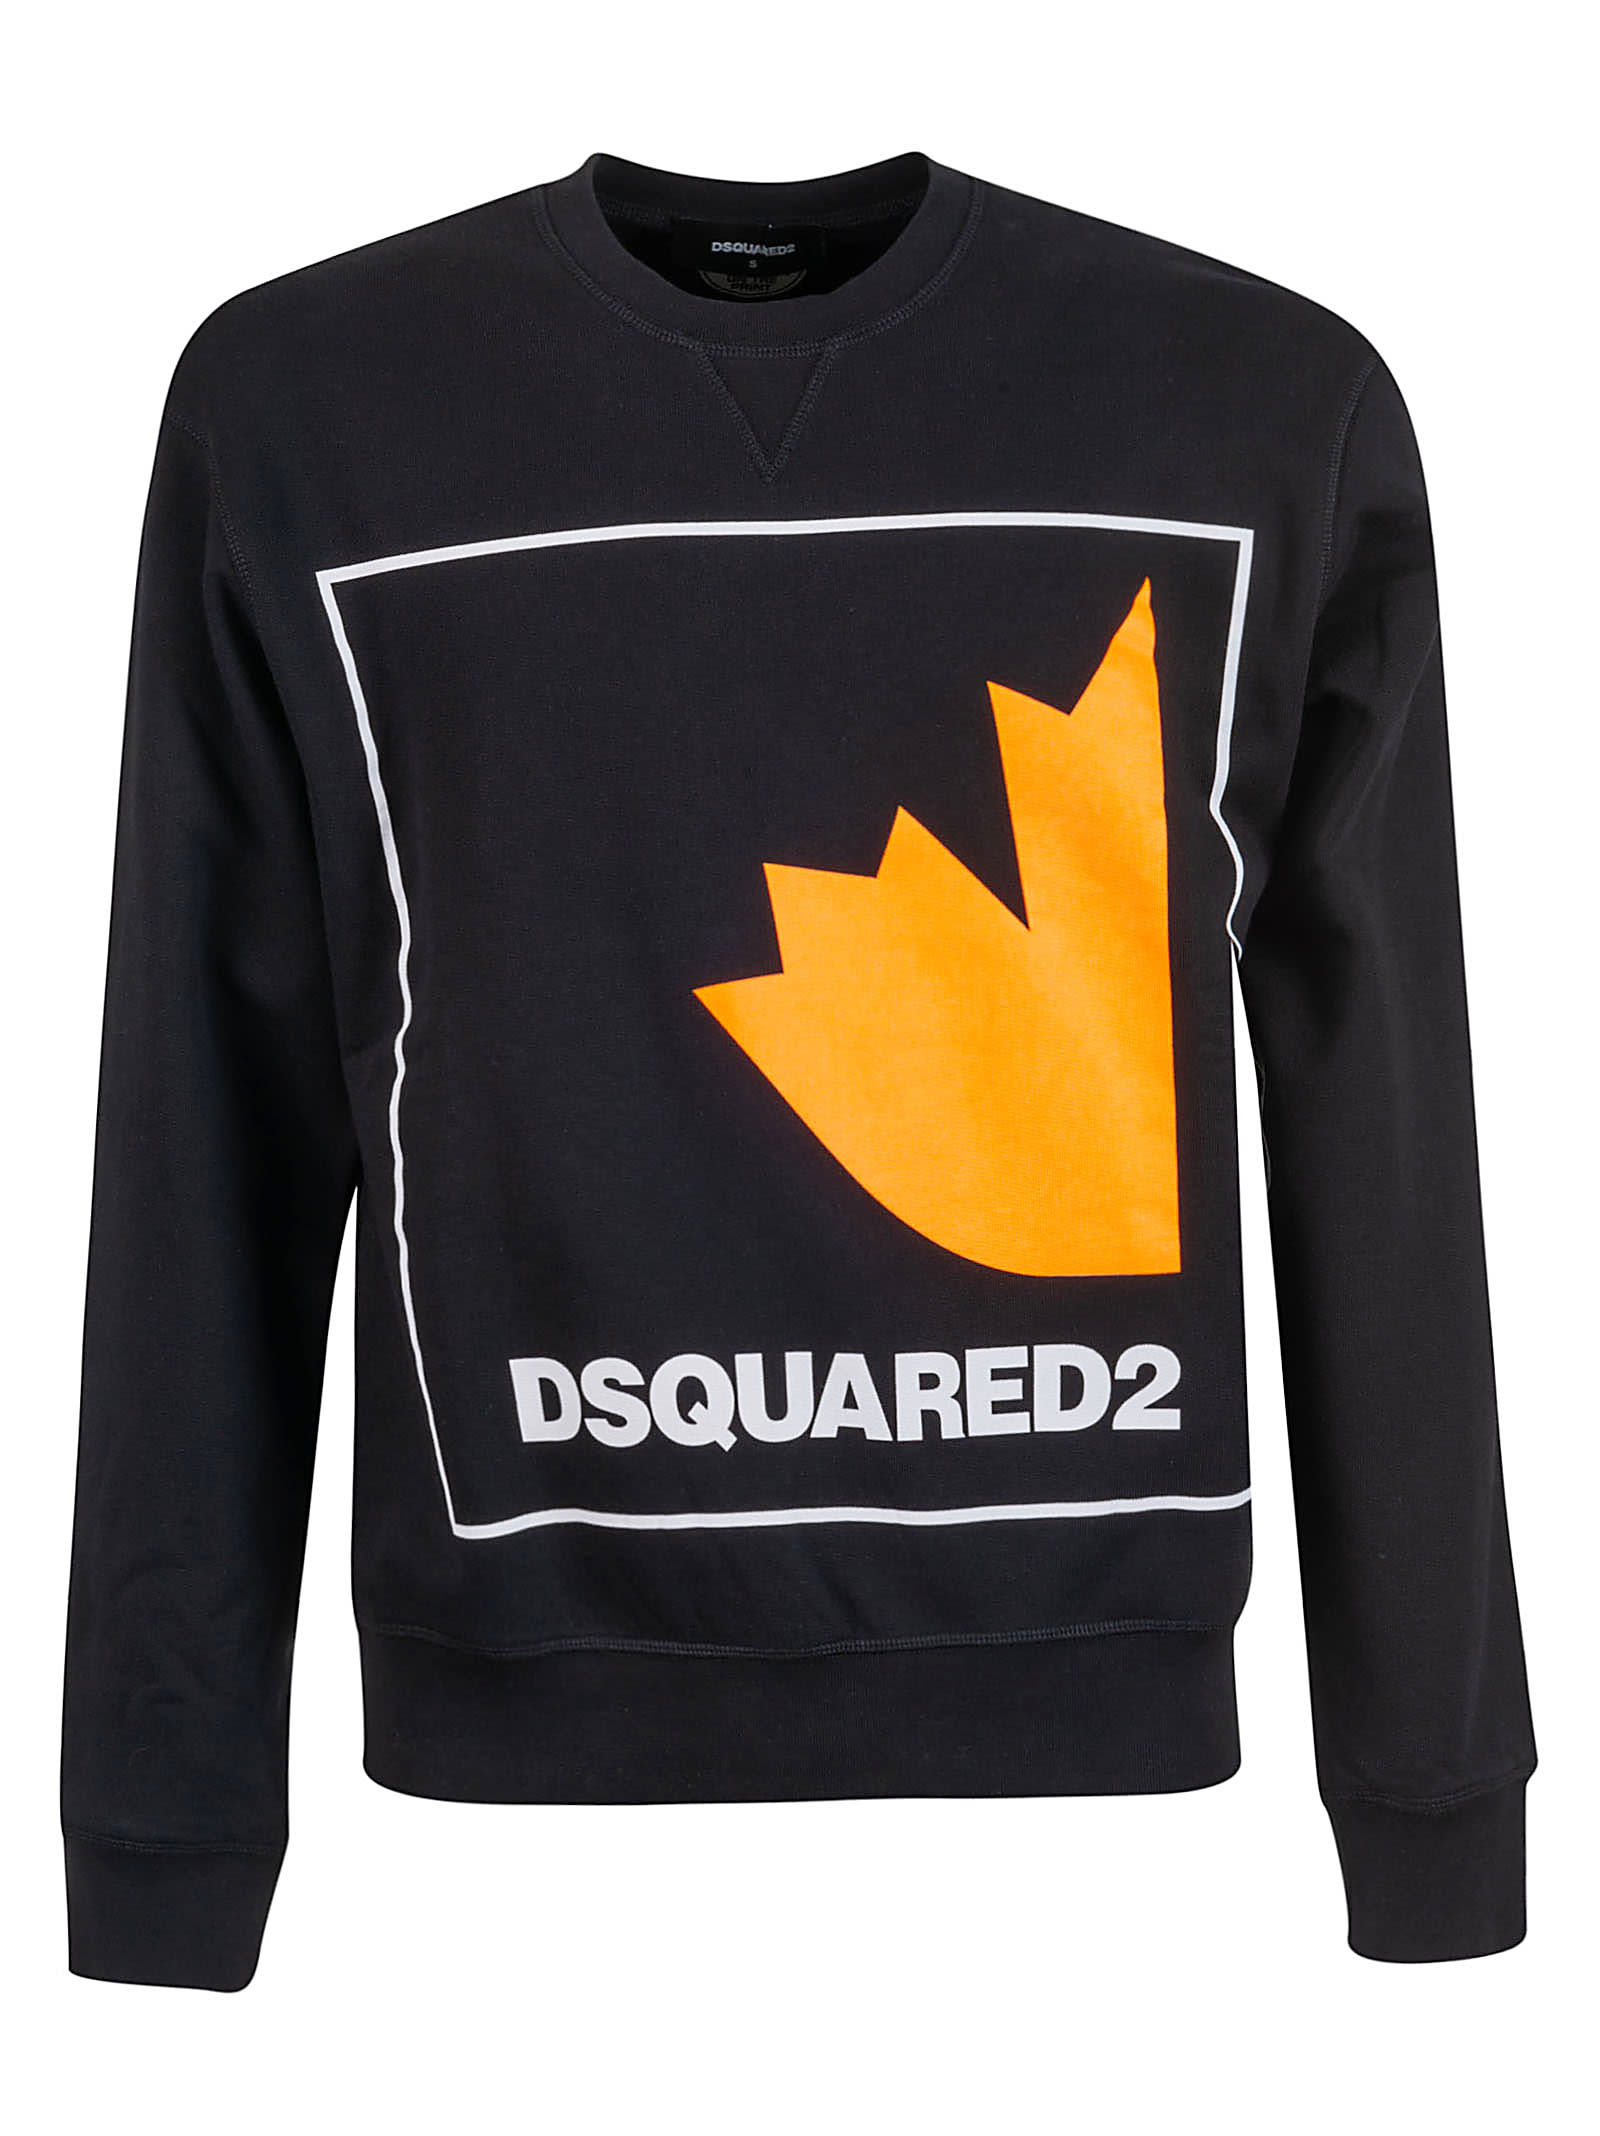 dsquared2 t shirt logo sweatshirt orange